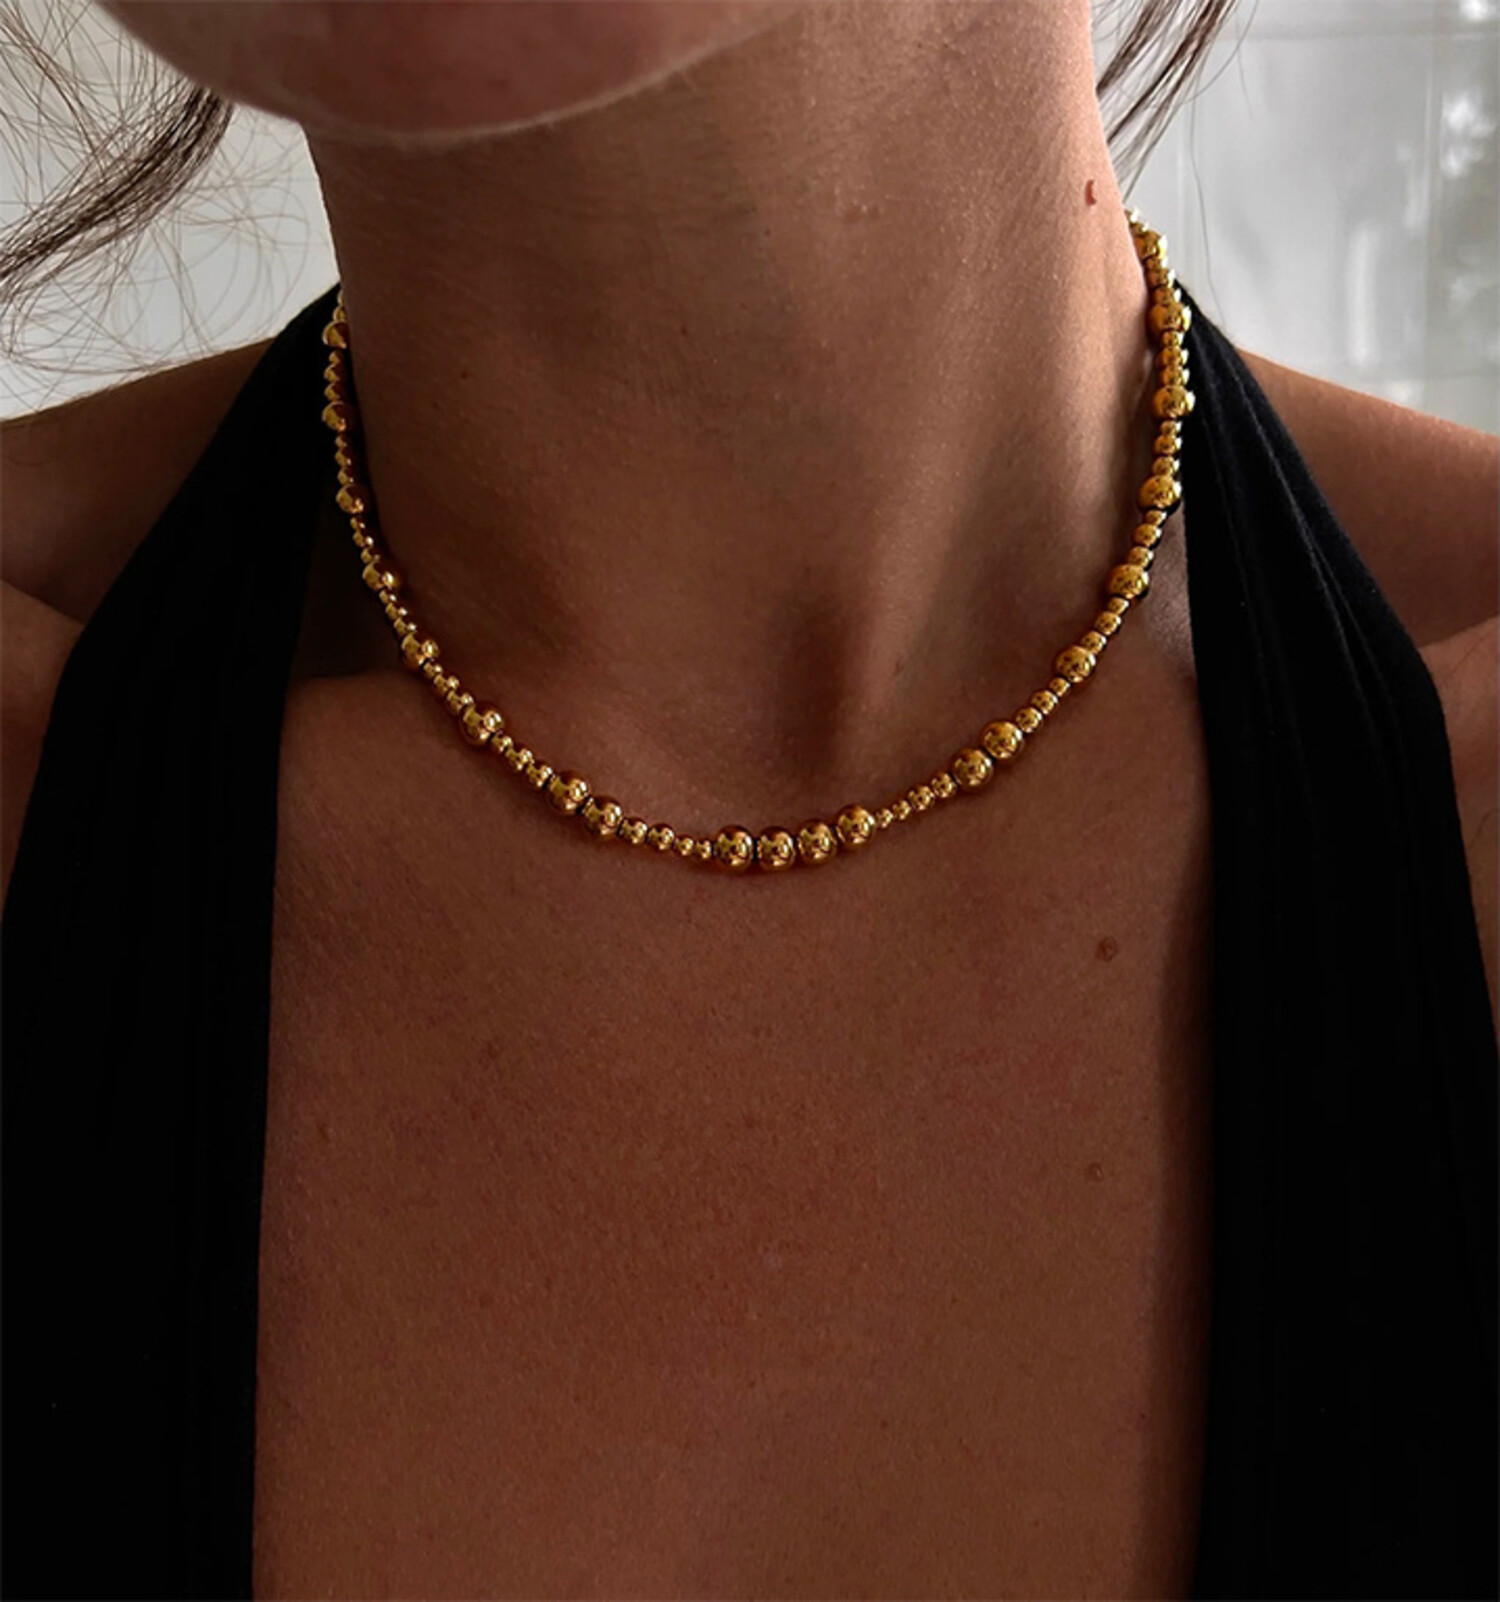 Beaded Satellite Chain Necklace in 18k Gold Vermeil | Kendra Scott